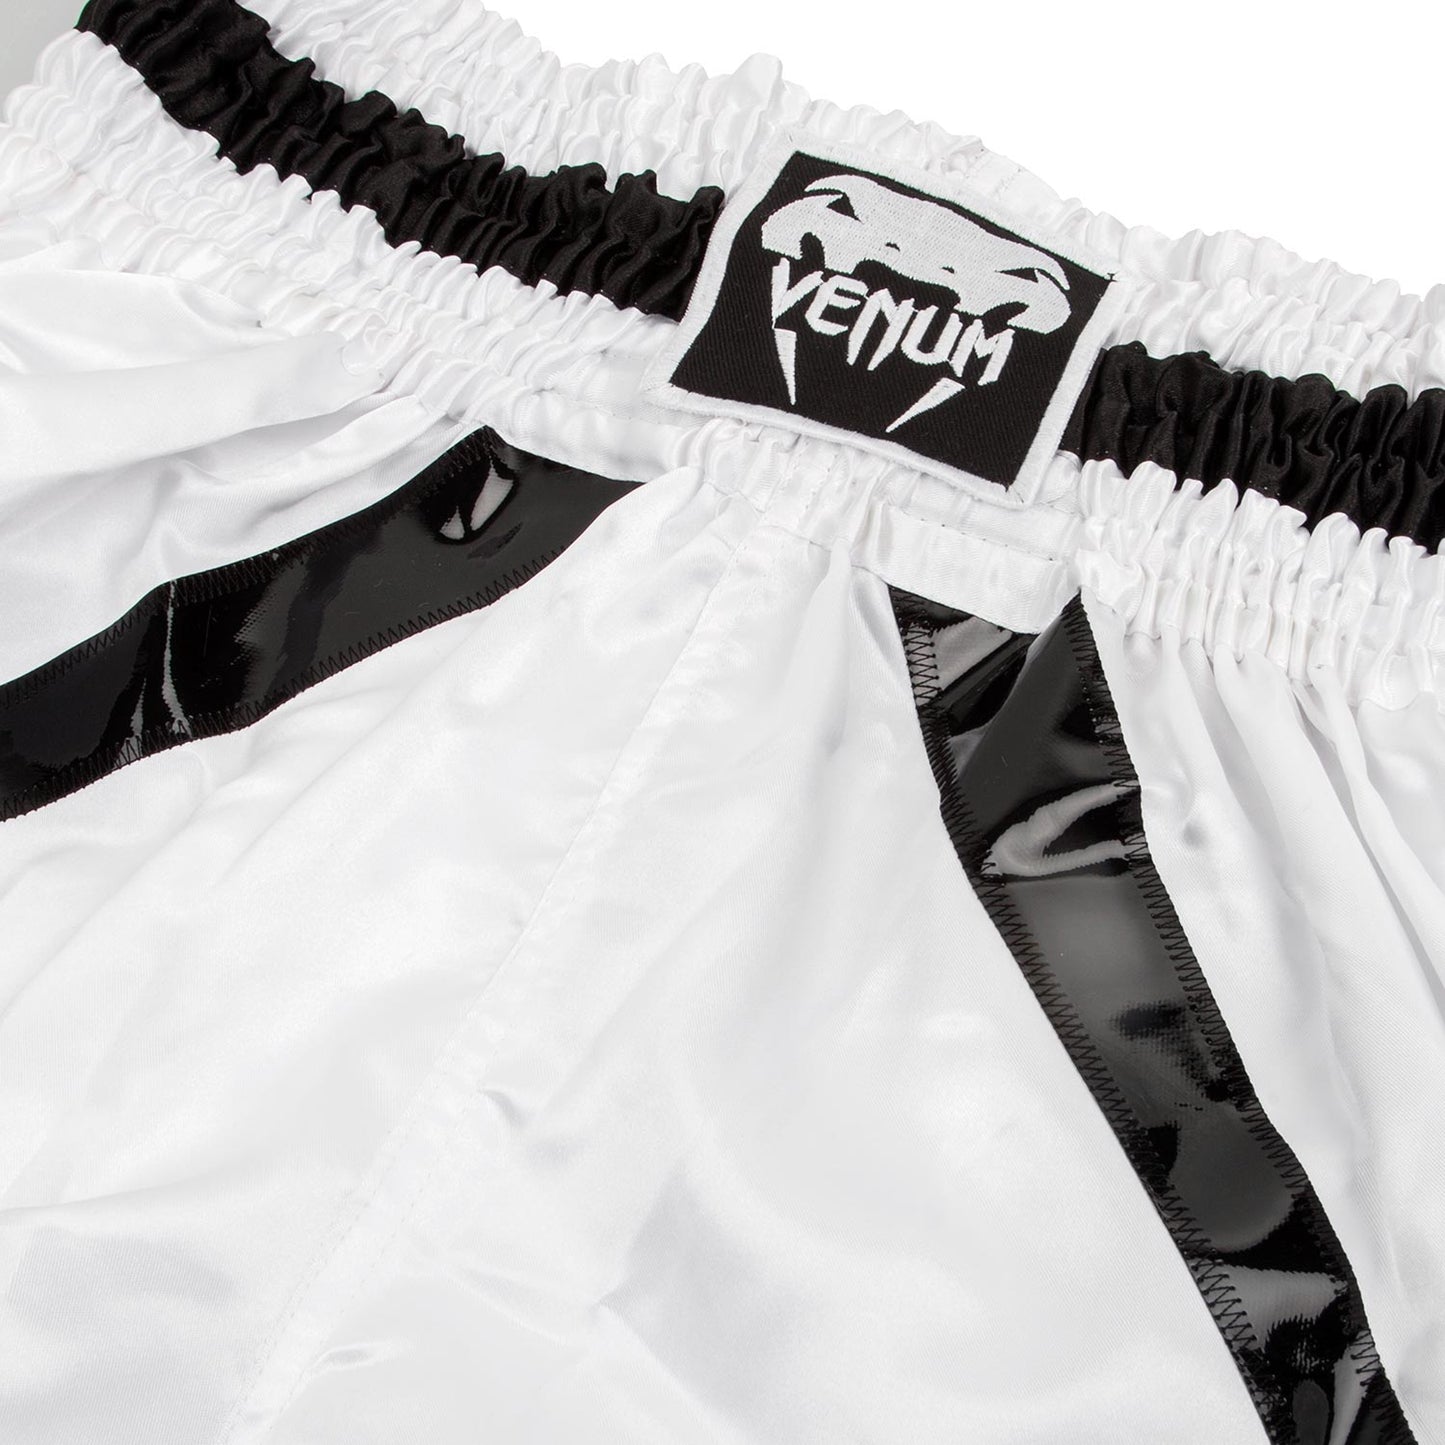 Venum Elite Boxing-shorts - Wit/Zwart